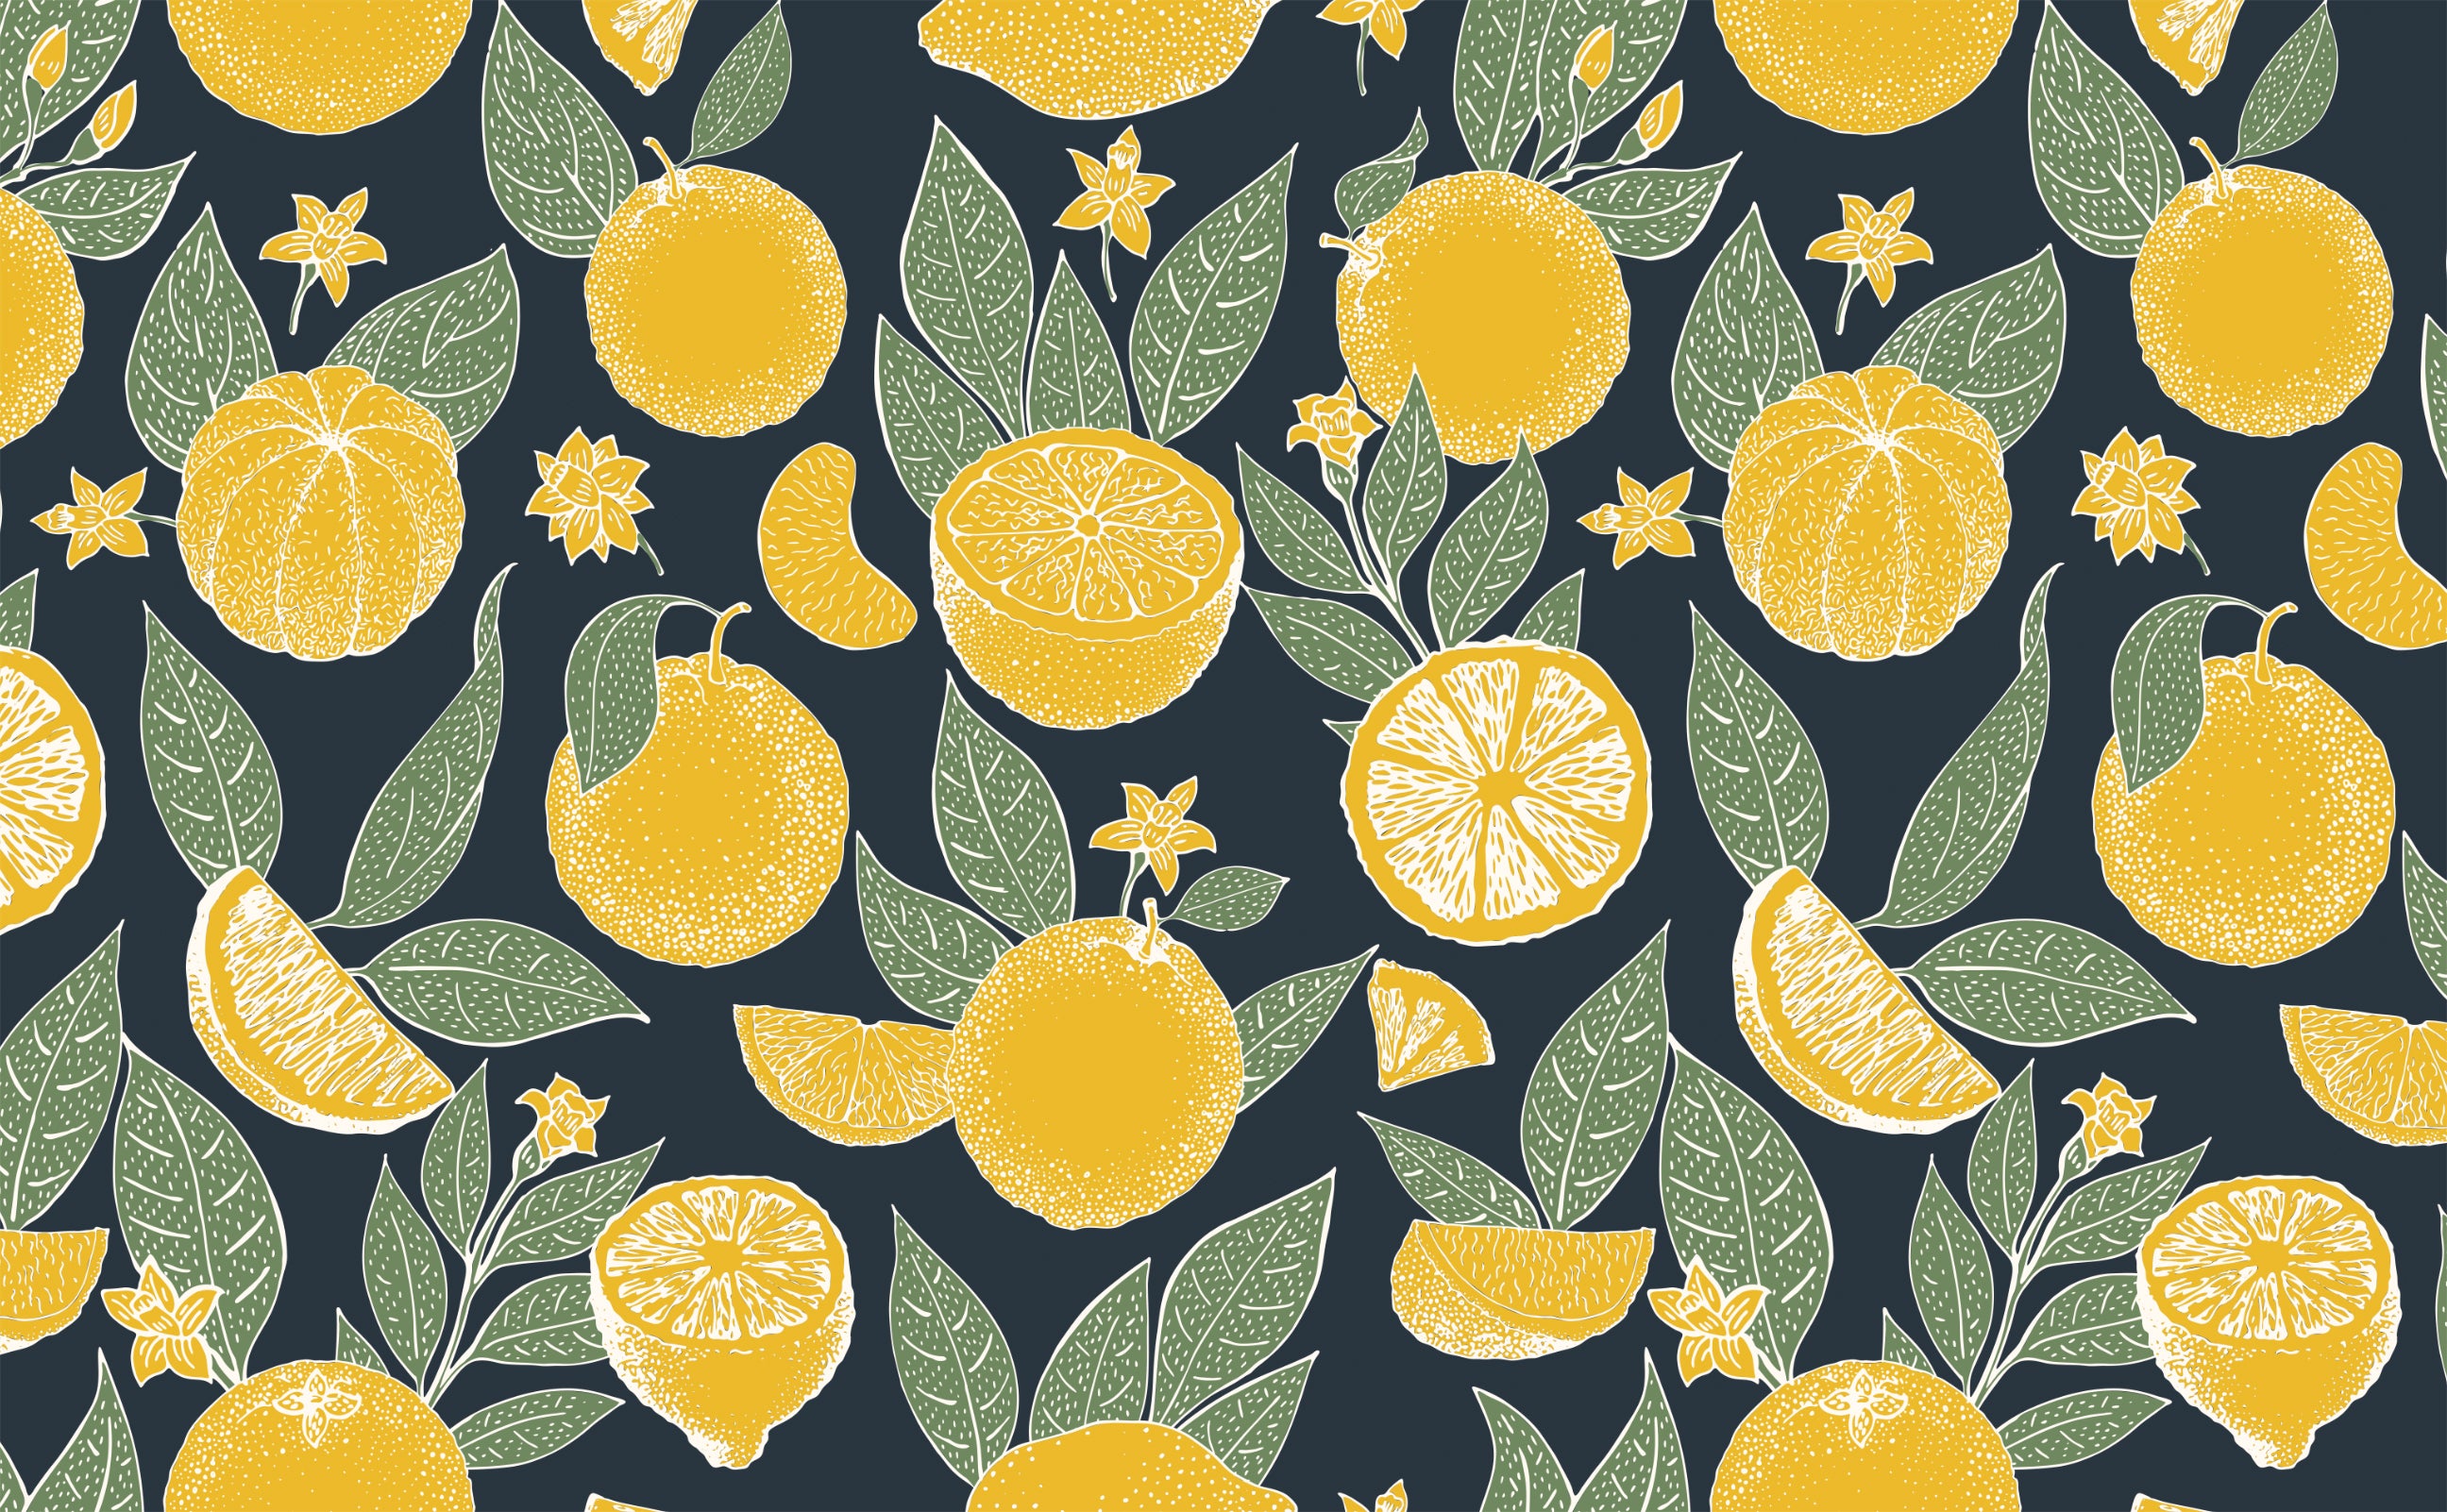 w0568_1s_Yellow-lemon-and-orange-sketch-wallpaper-Citrus-Grove_Repeating-Pattern-Sample-1.jpg?v=1614981932